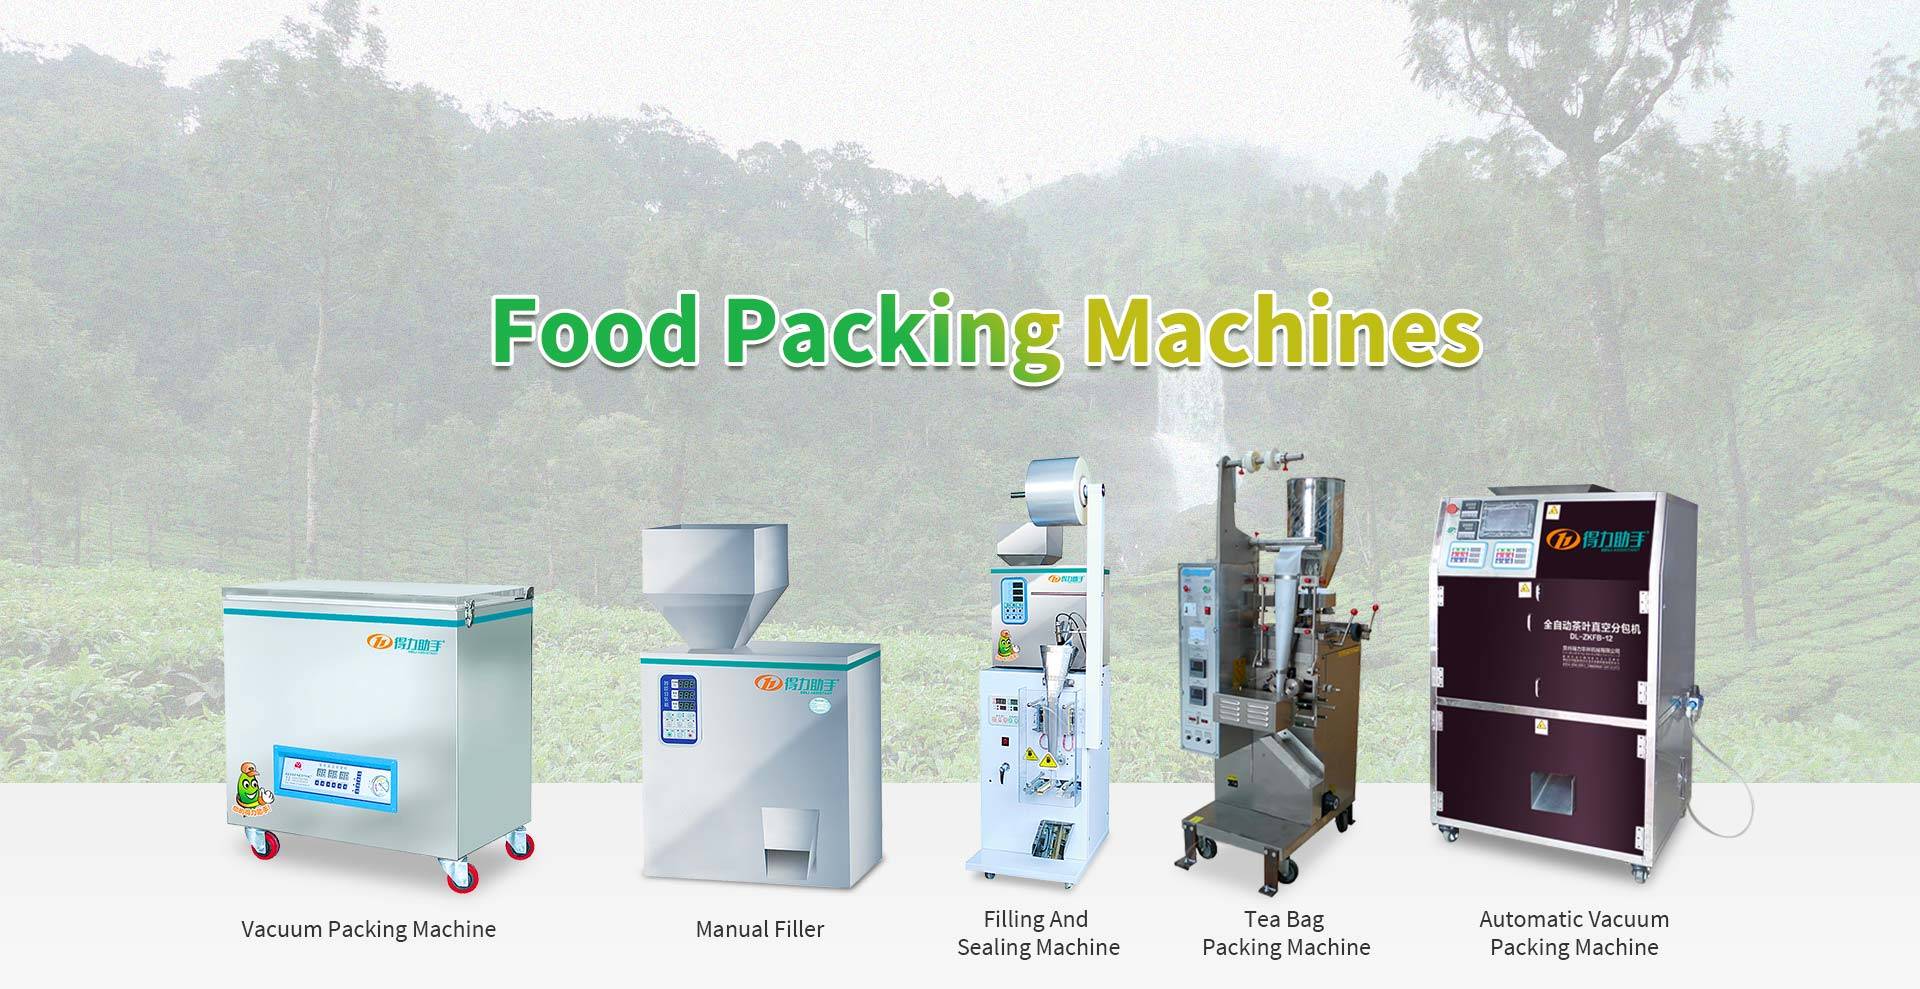 Strojevi za pakiranje hrane